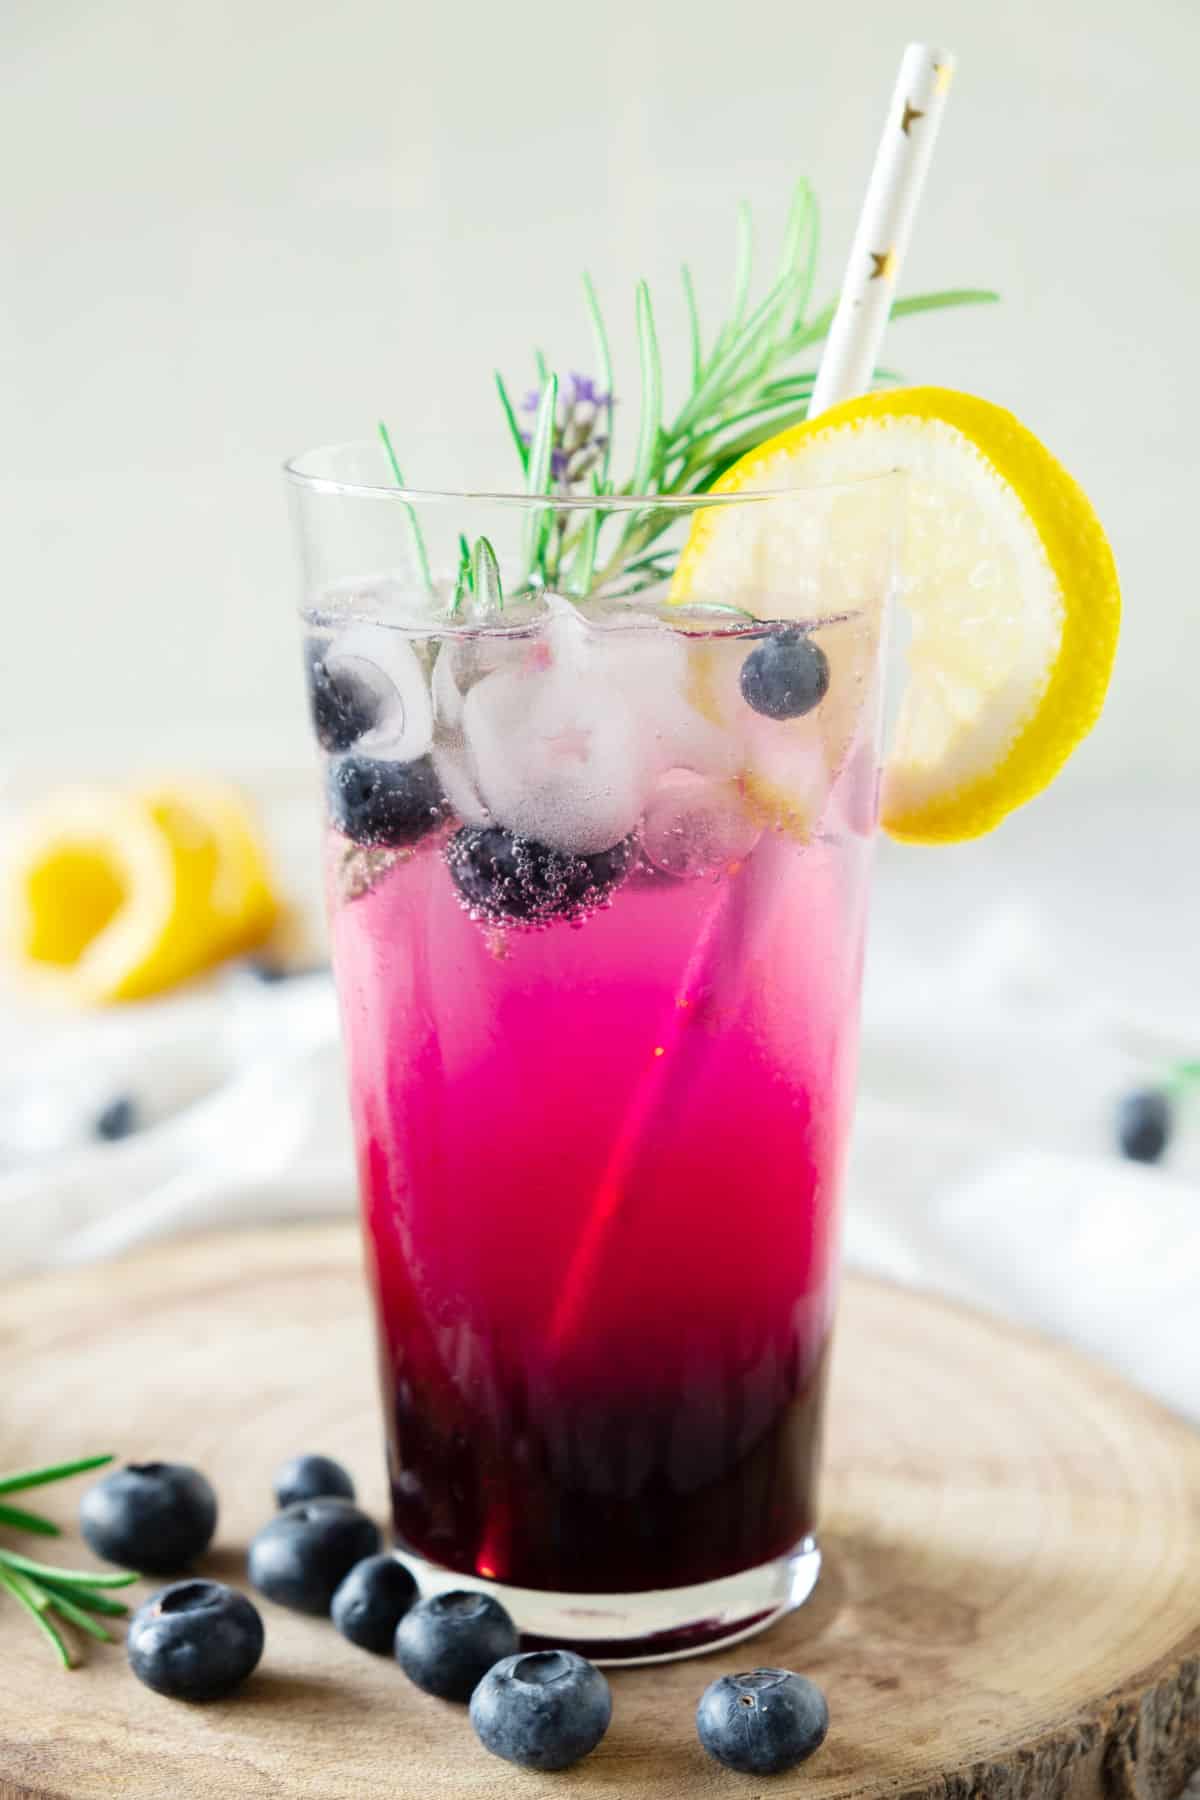 Single glass of blueberry vodka lemonade with rosemary sprig, lemon slice and ice. Wooden round, beige background.